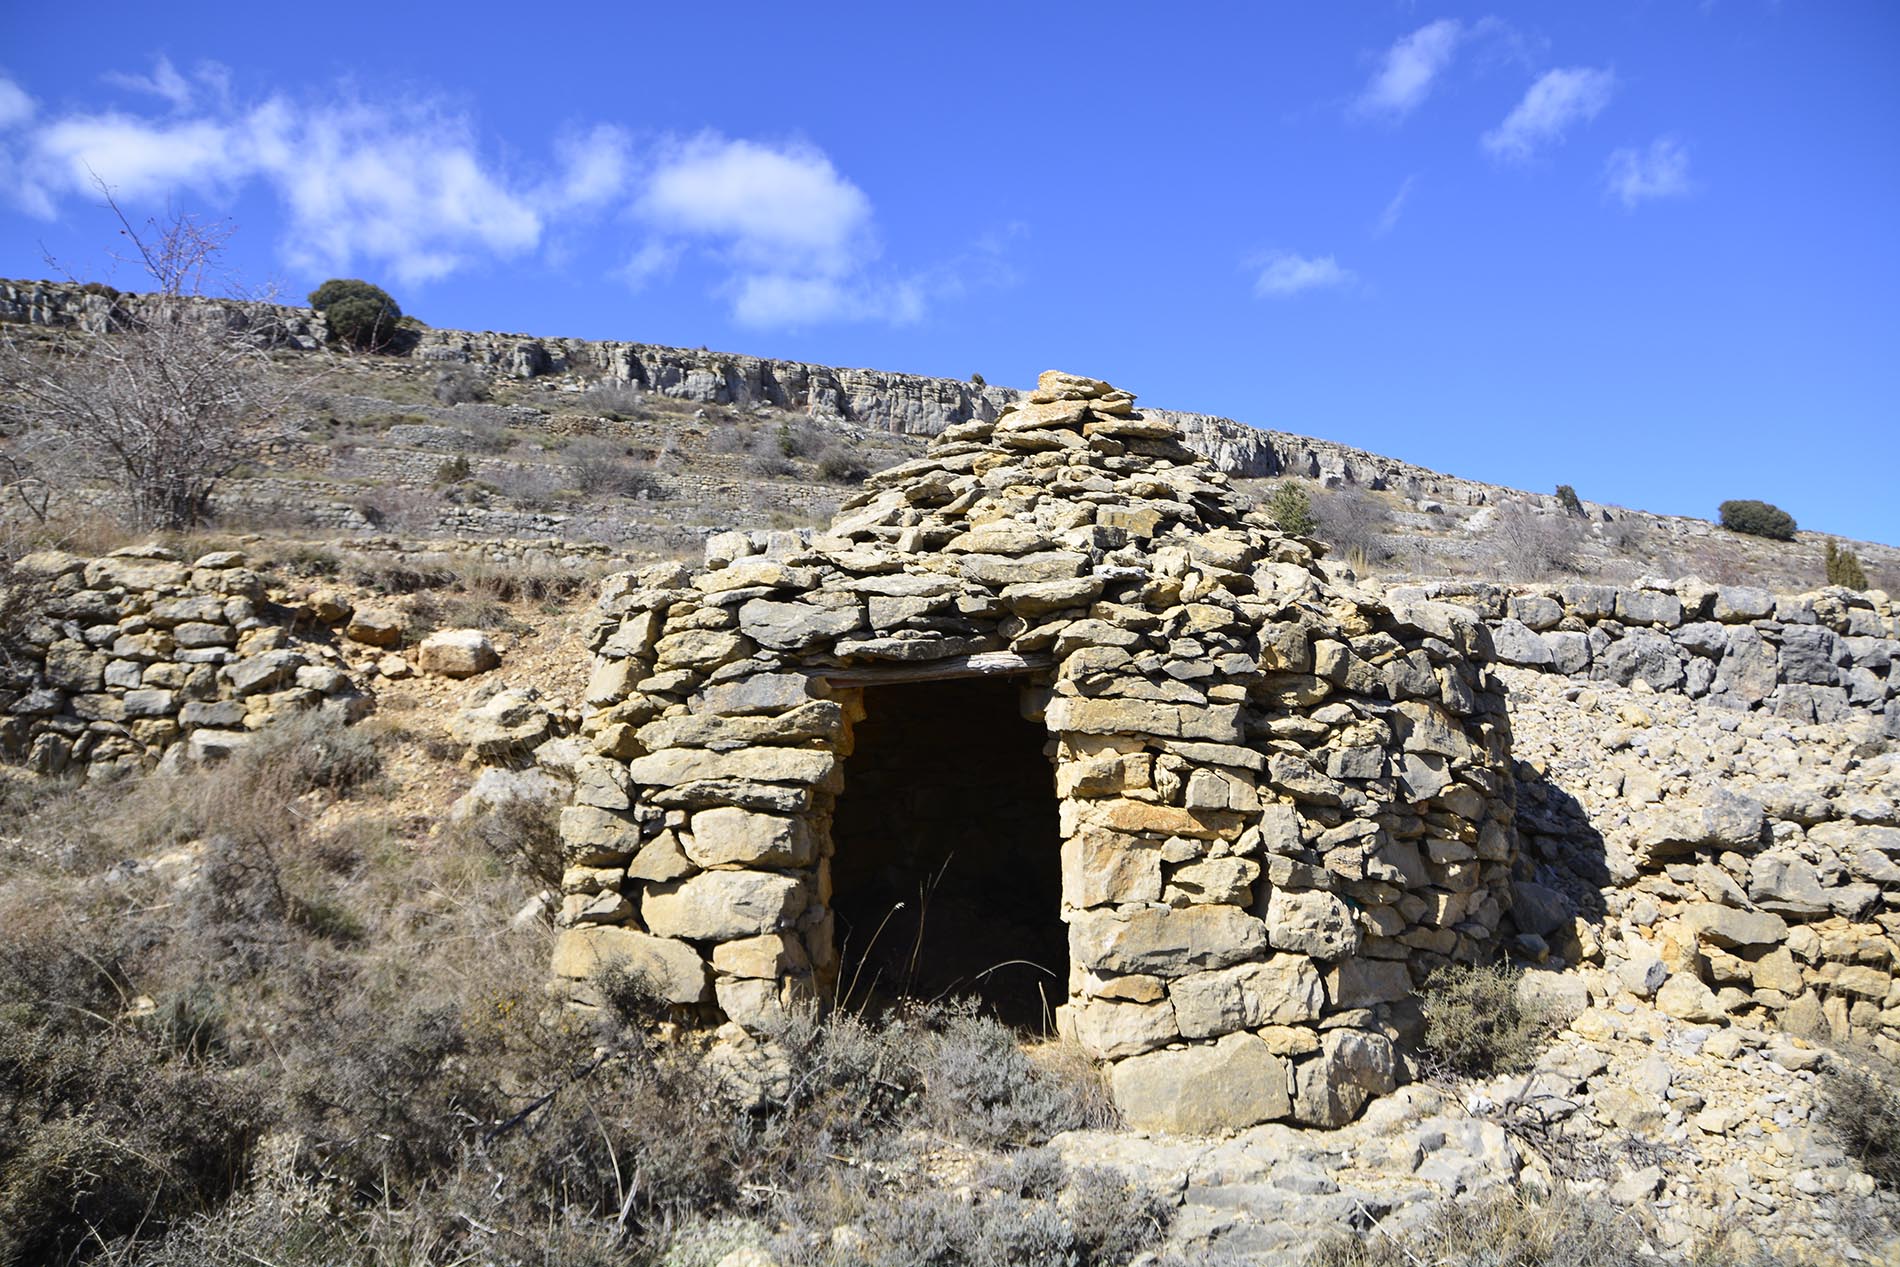 Técnica constructiva de la piedra seca en Aragón. Foto: Juan Carlos Gil Ballano